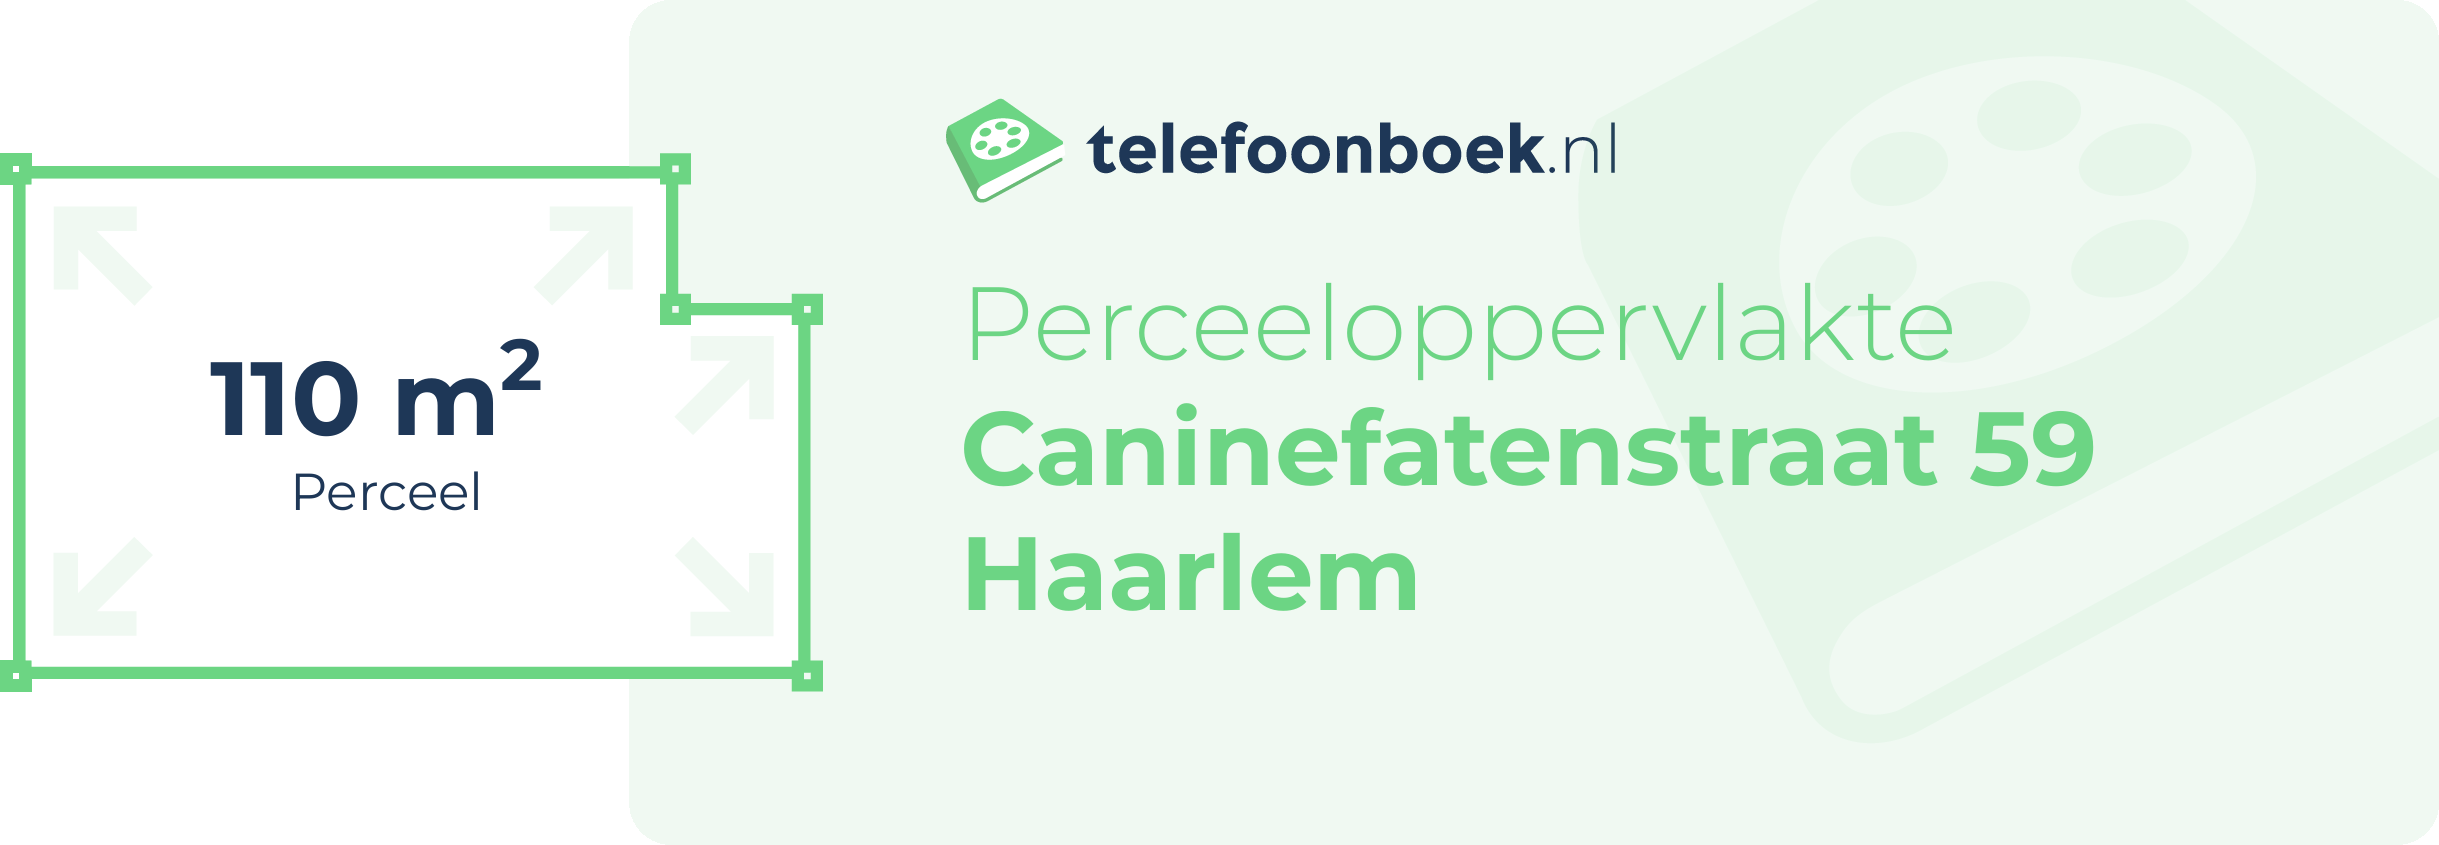 Perceeloppervlakte Caninefatenstraat 59 Haarlem